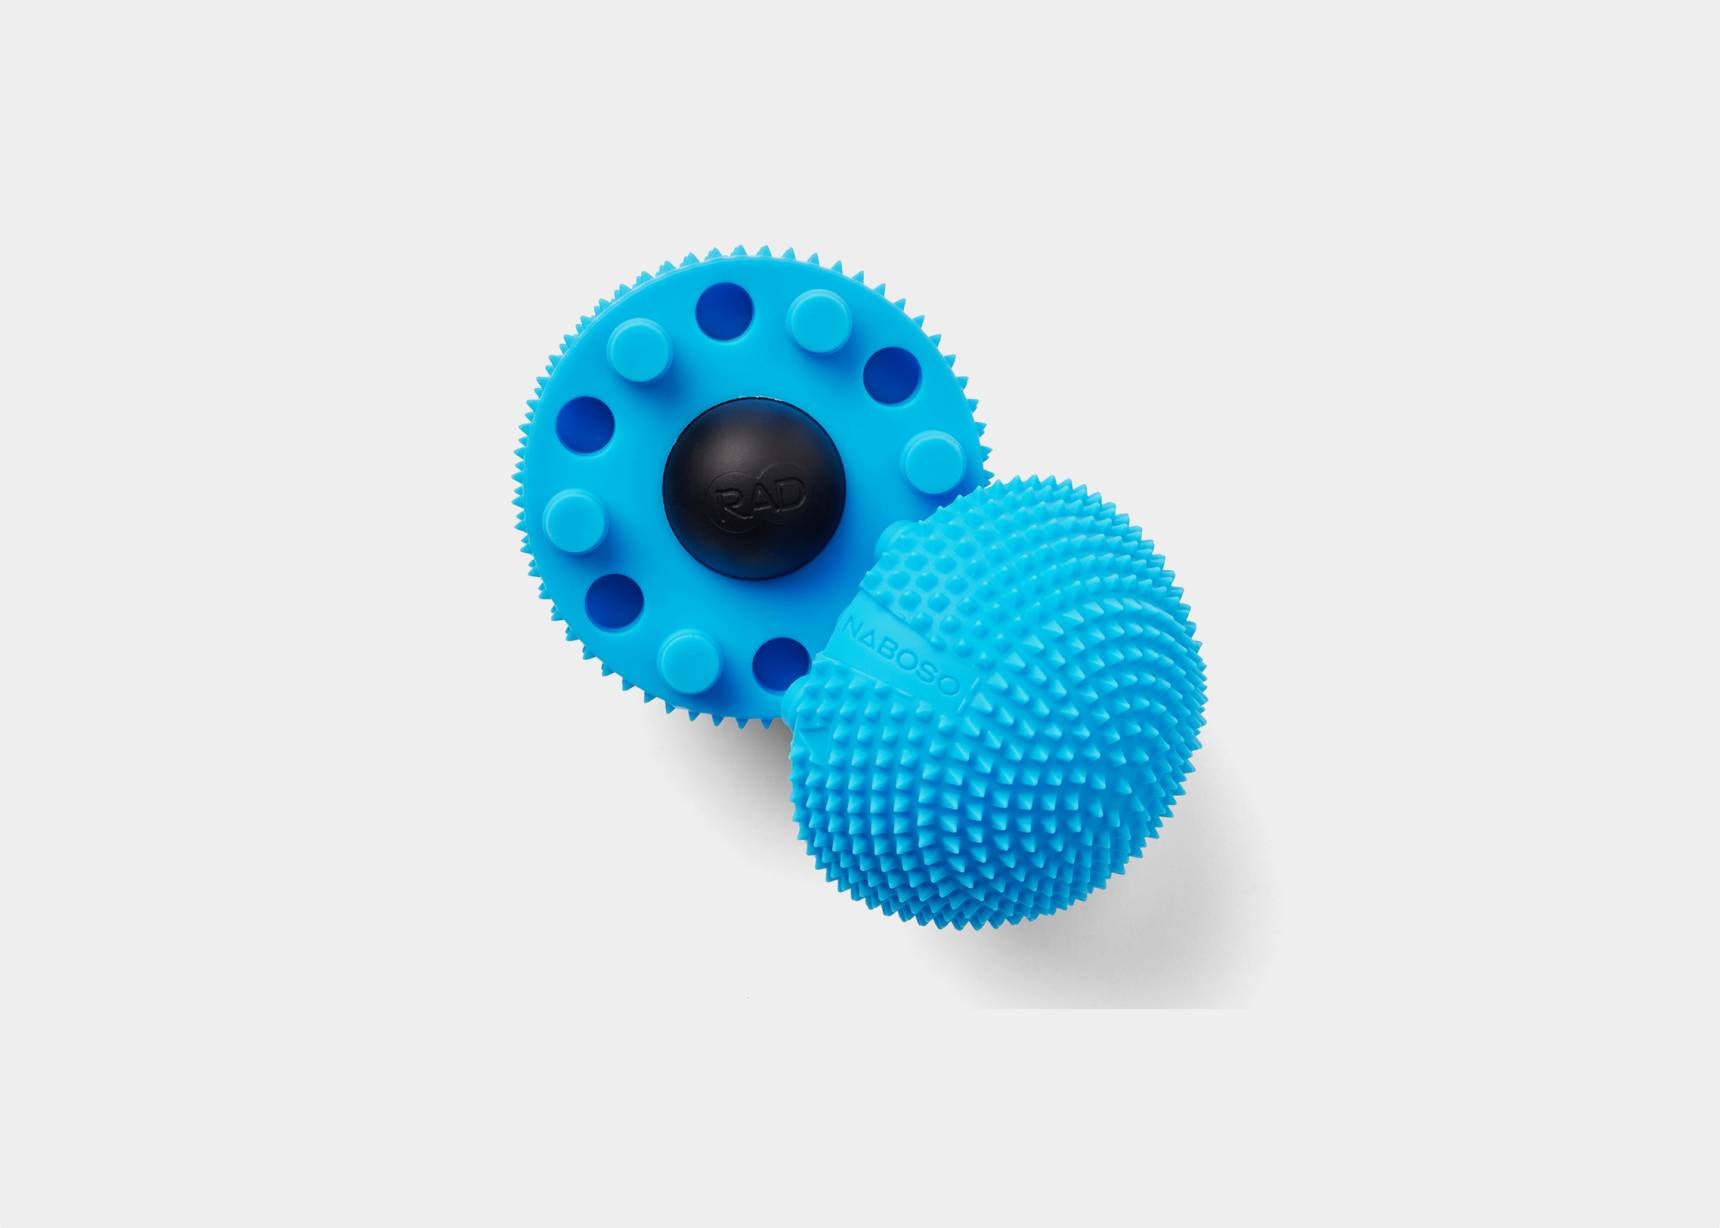 Textured blue Naboso Neuro Ball for grip training.